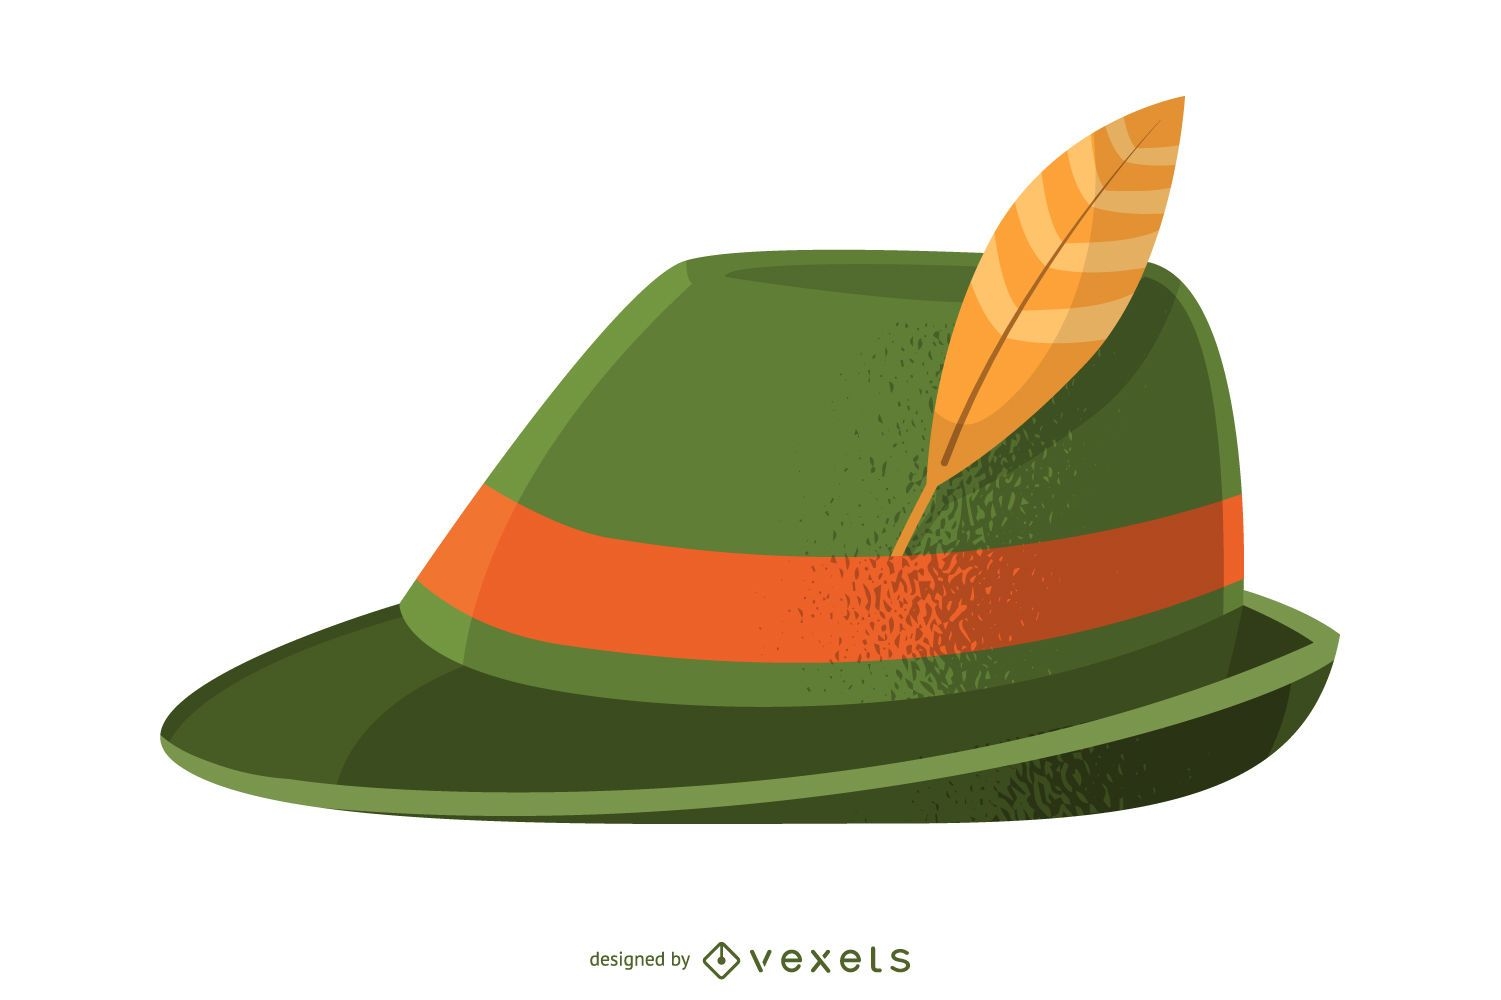 Bavarian hat illustration